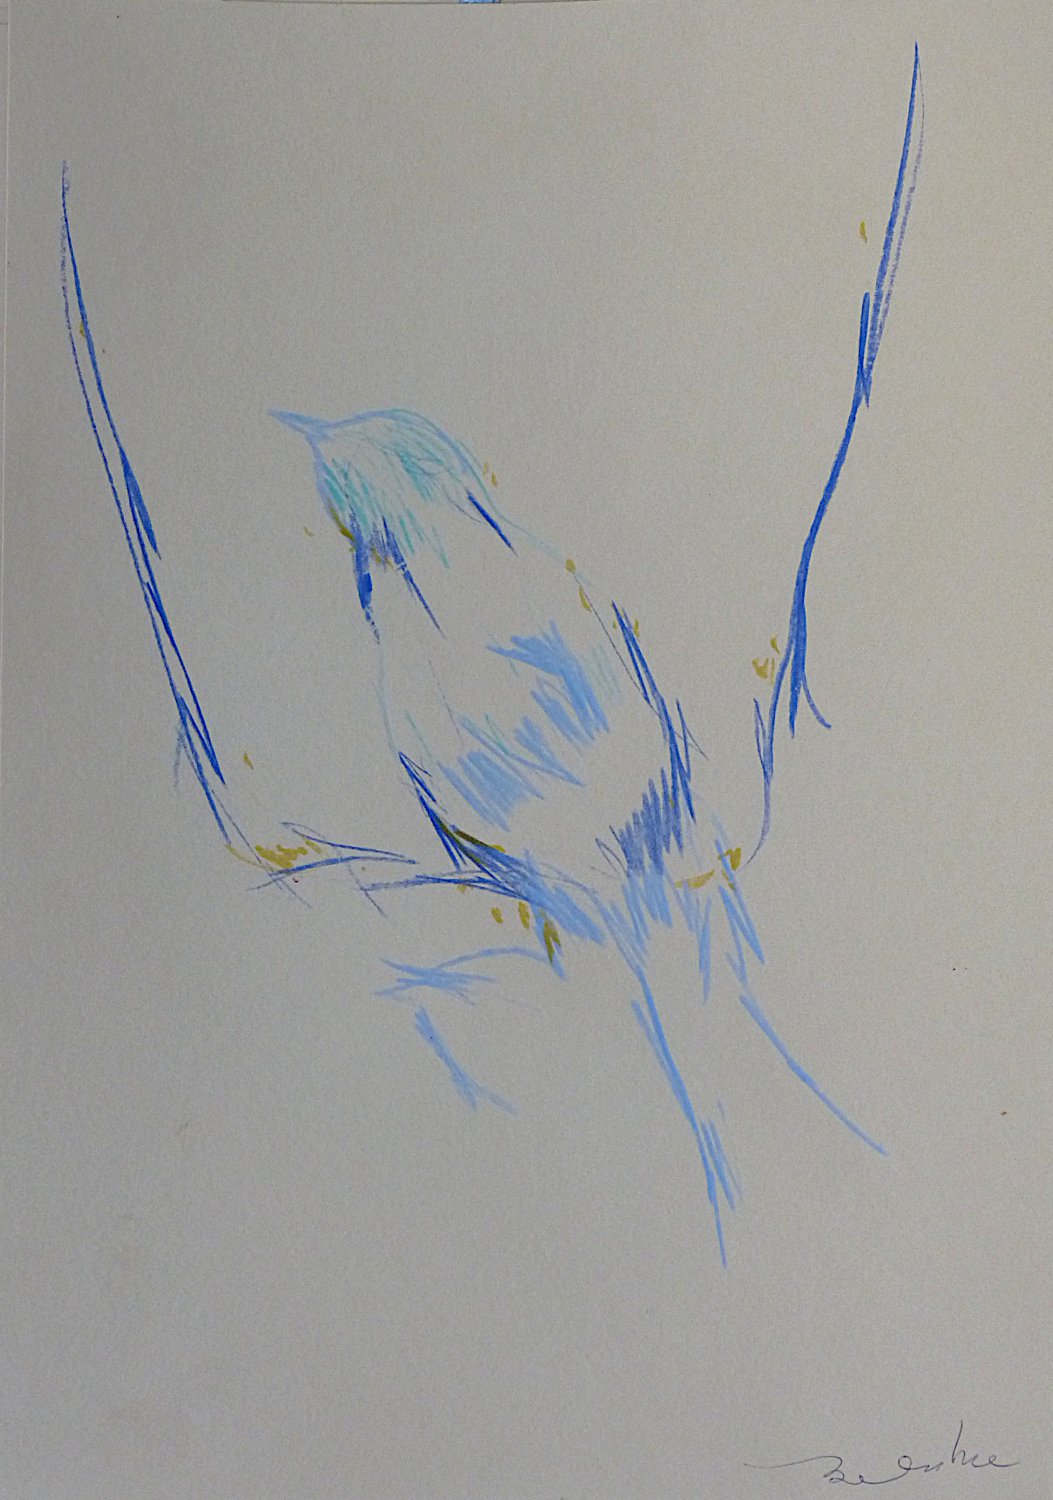 #58 - Gestural Research - The Bird - original drawing 29x21 cm